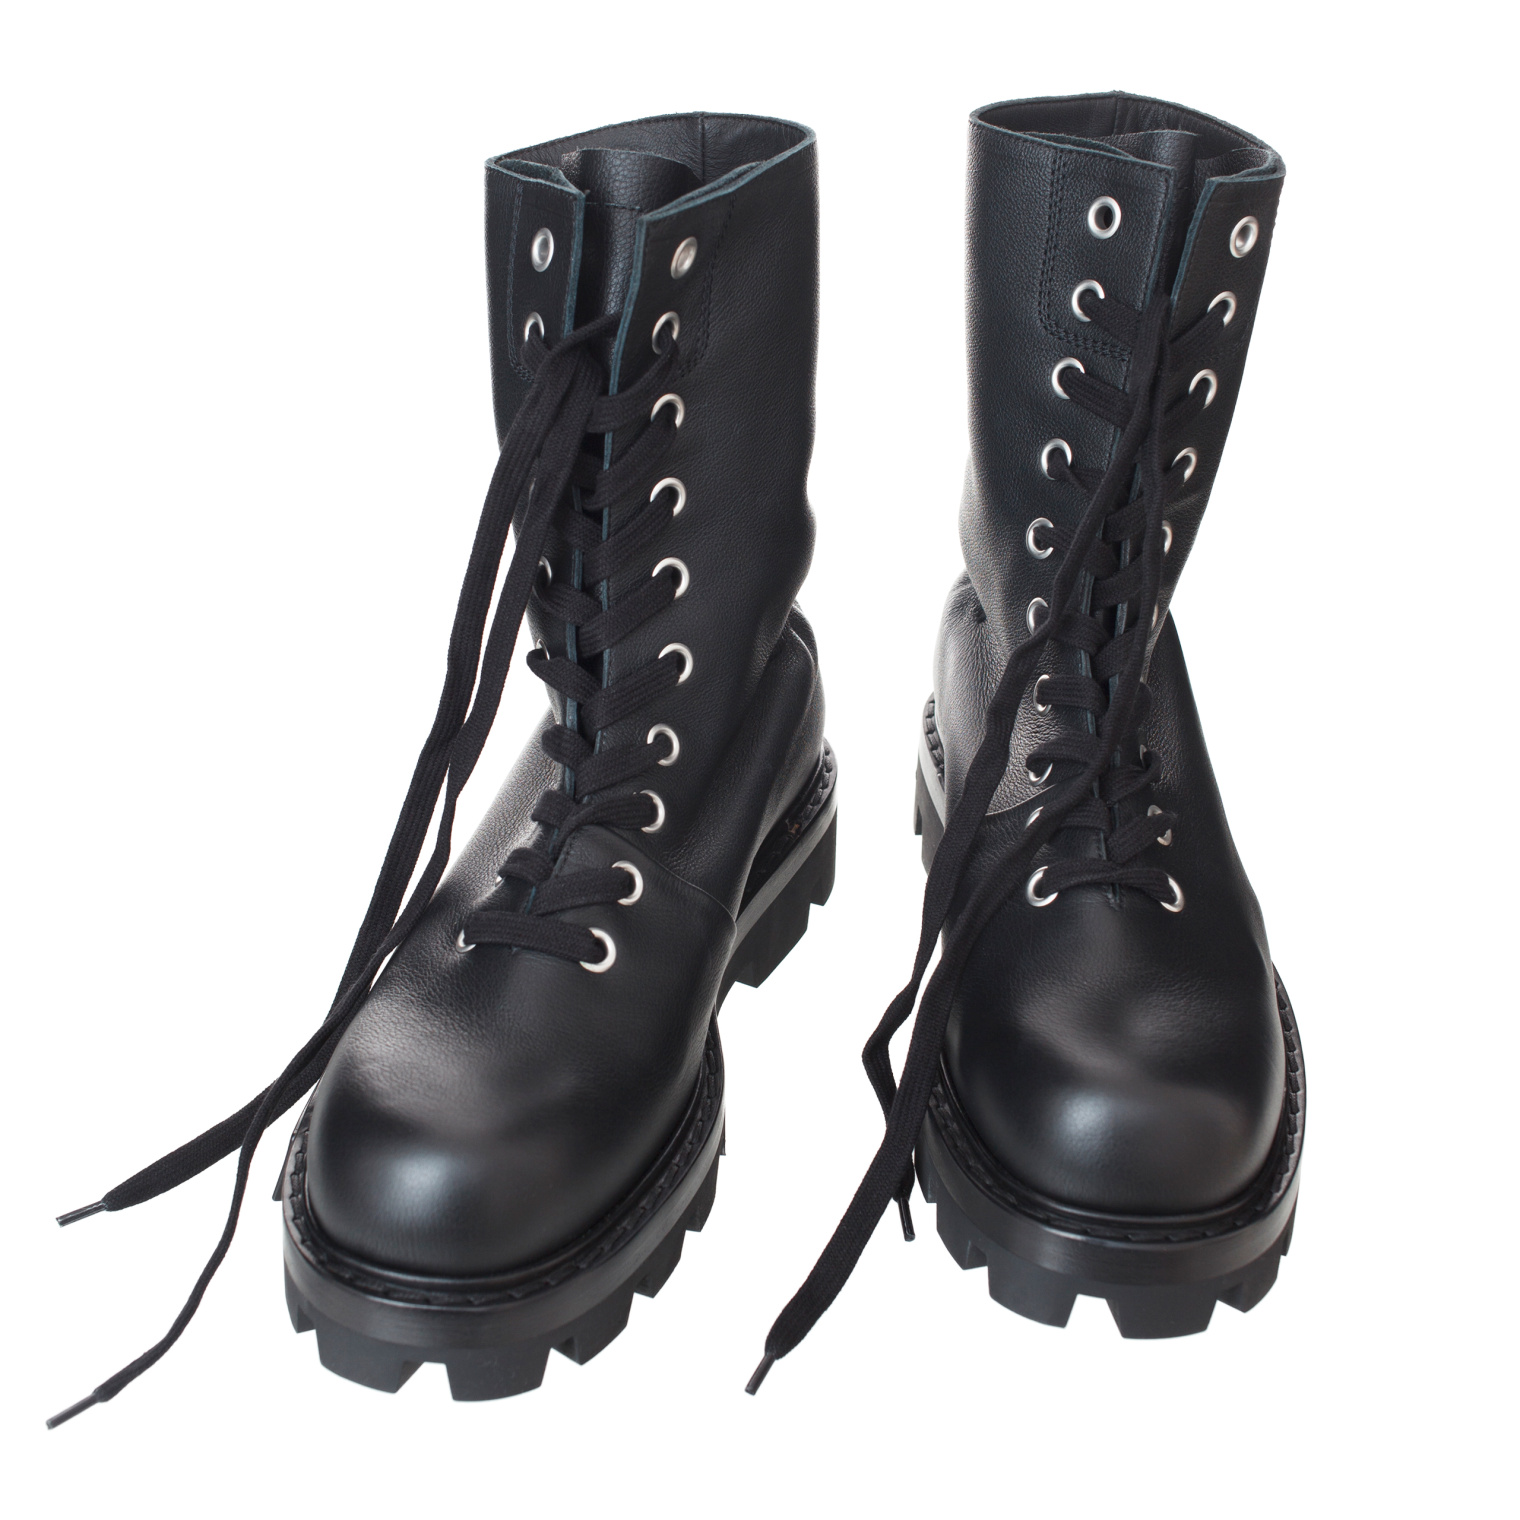 OAMC Edmund leather boots